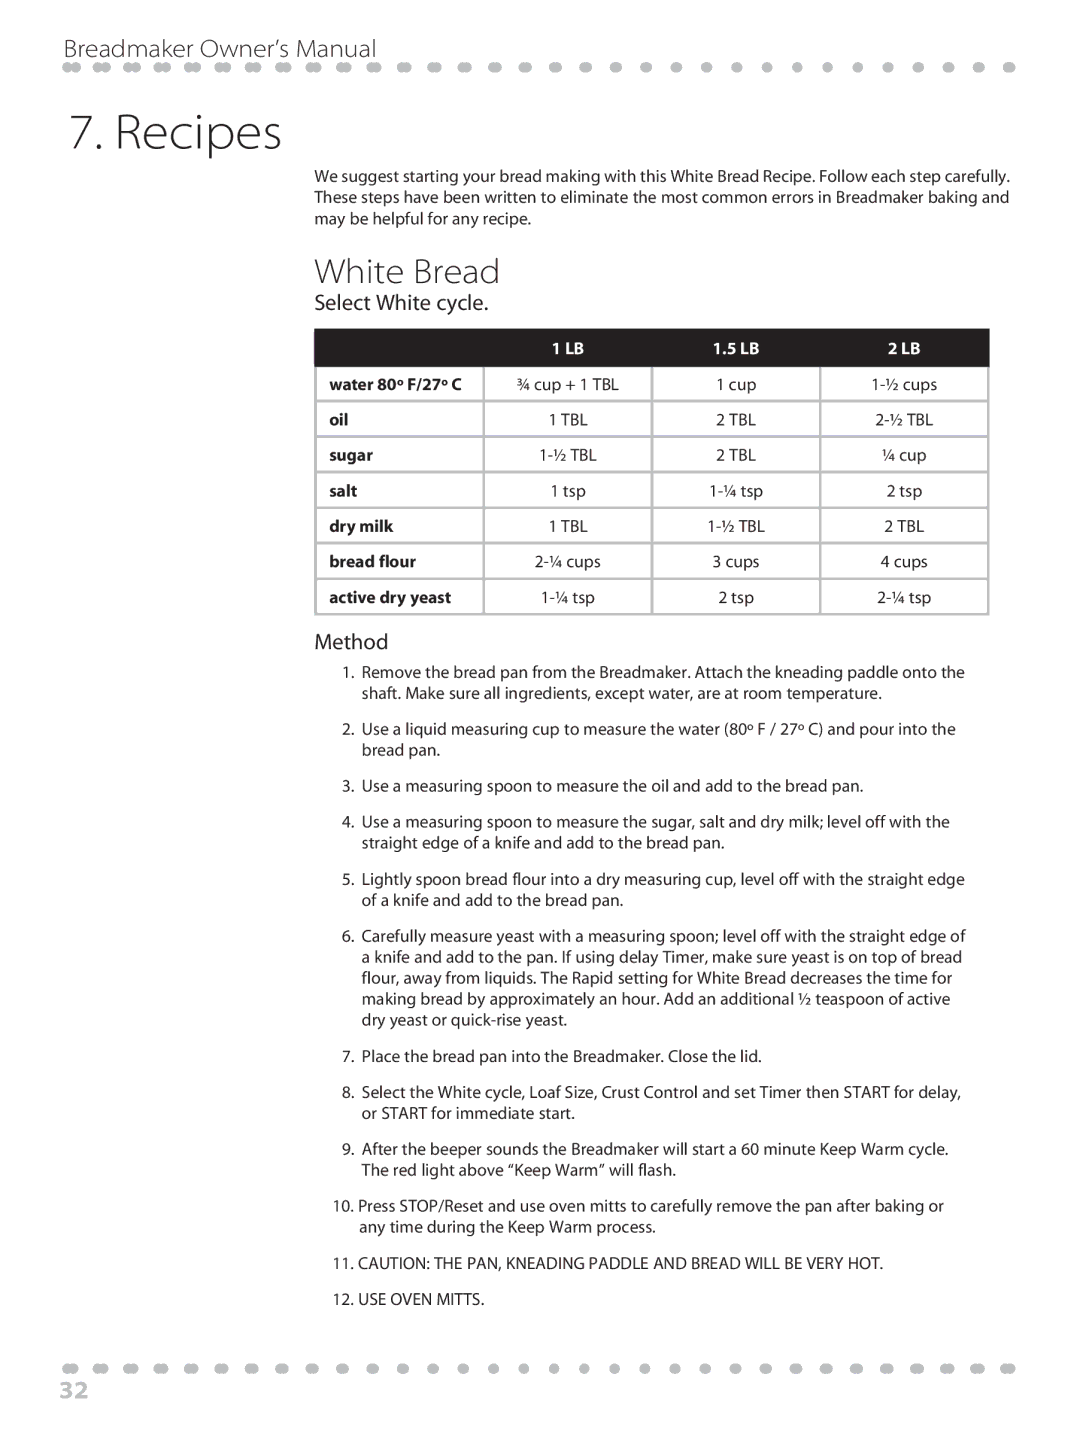 Toastmaster WBYBM1 manual Recipes, White Bread, Select White cycle, Method 